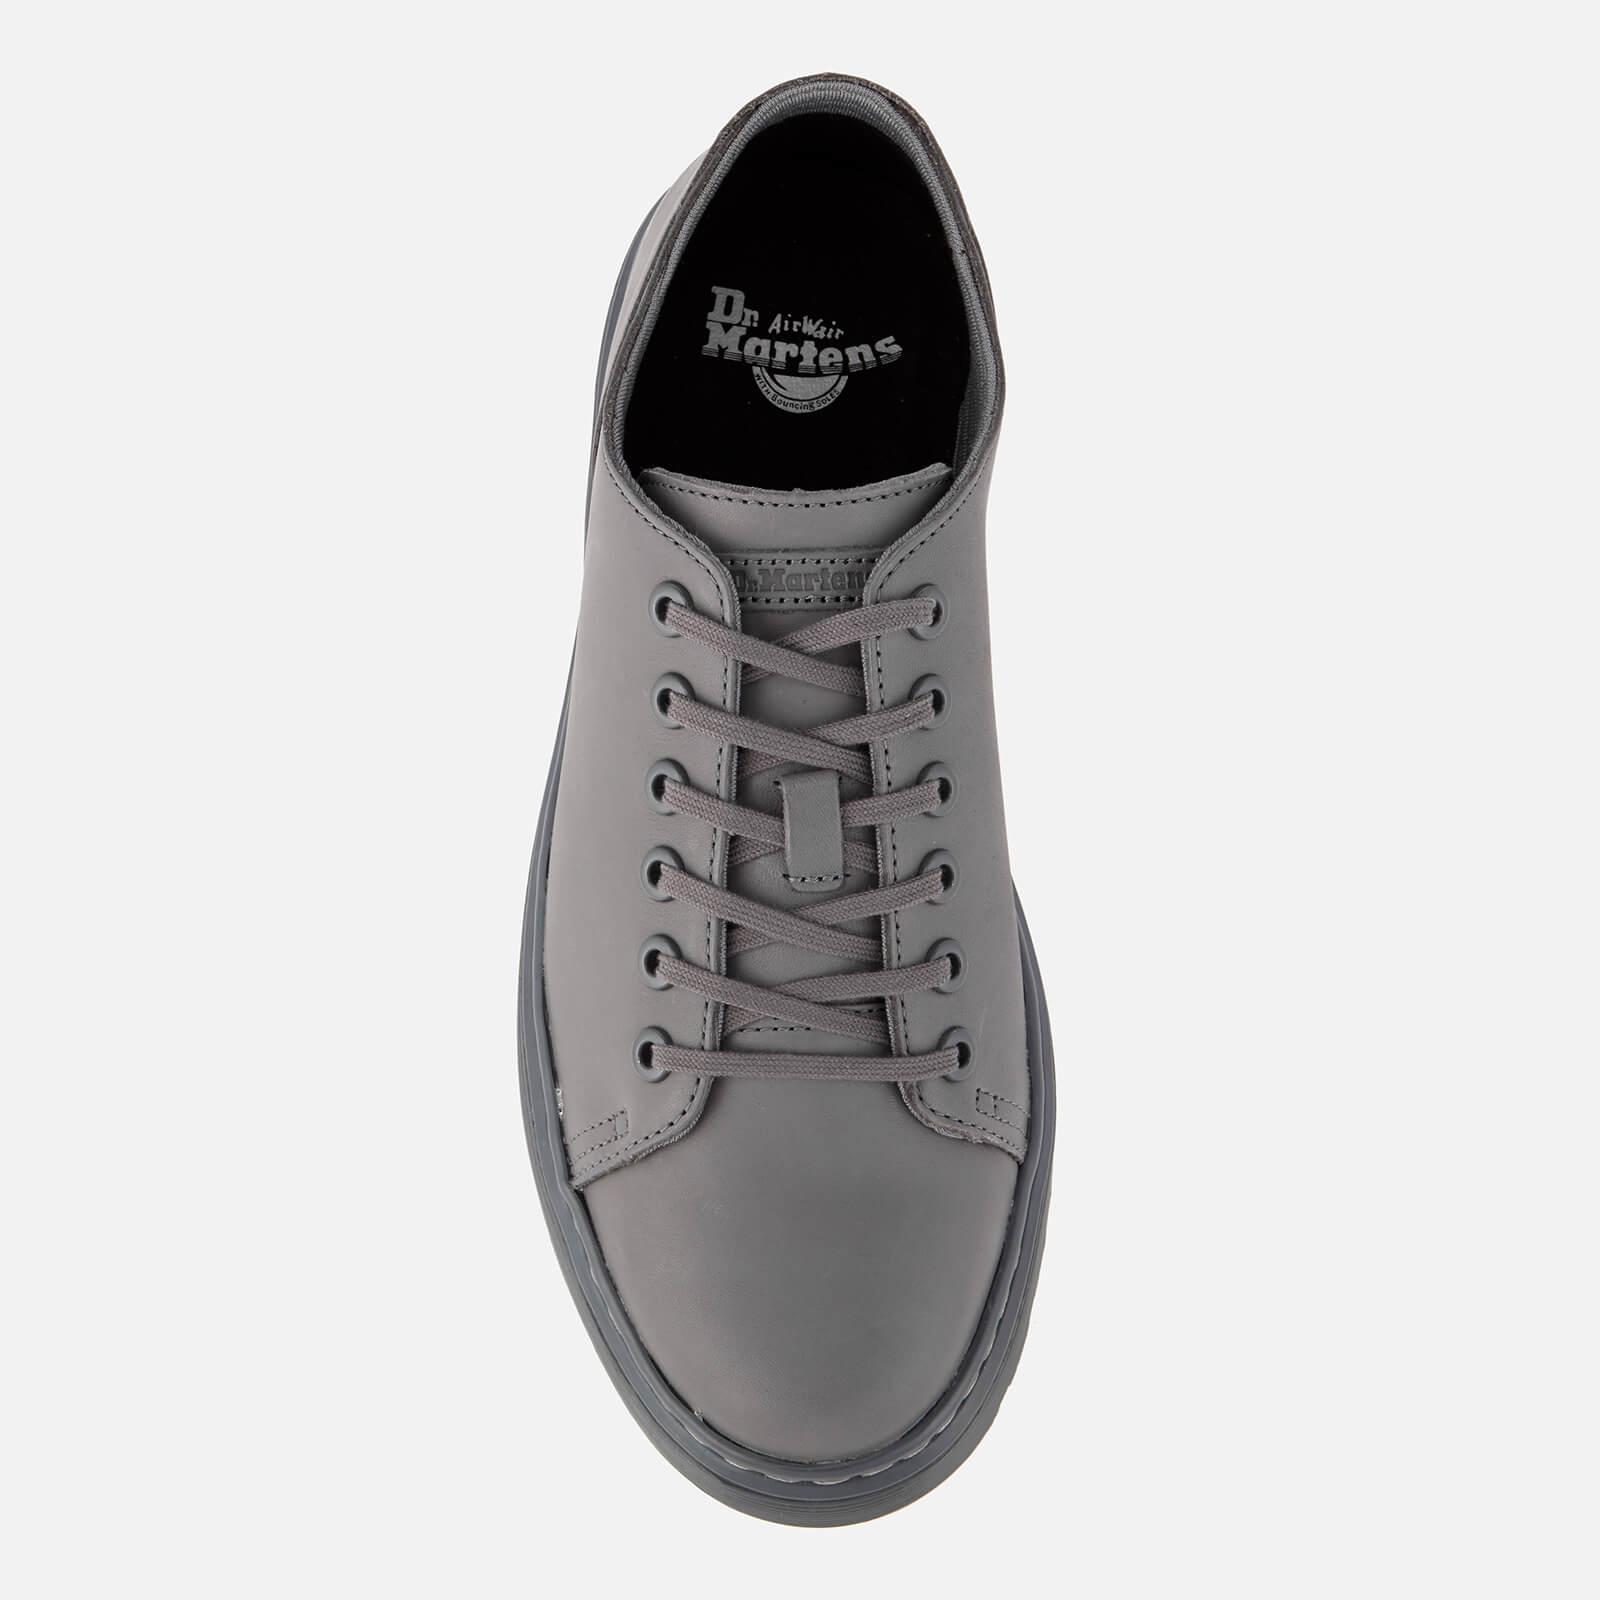 Dr. Martens Dante Sendal Leather 6-eye Shoes in Grey (Gray) for Men - Lyst